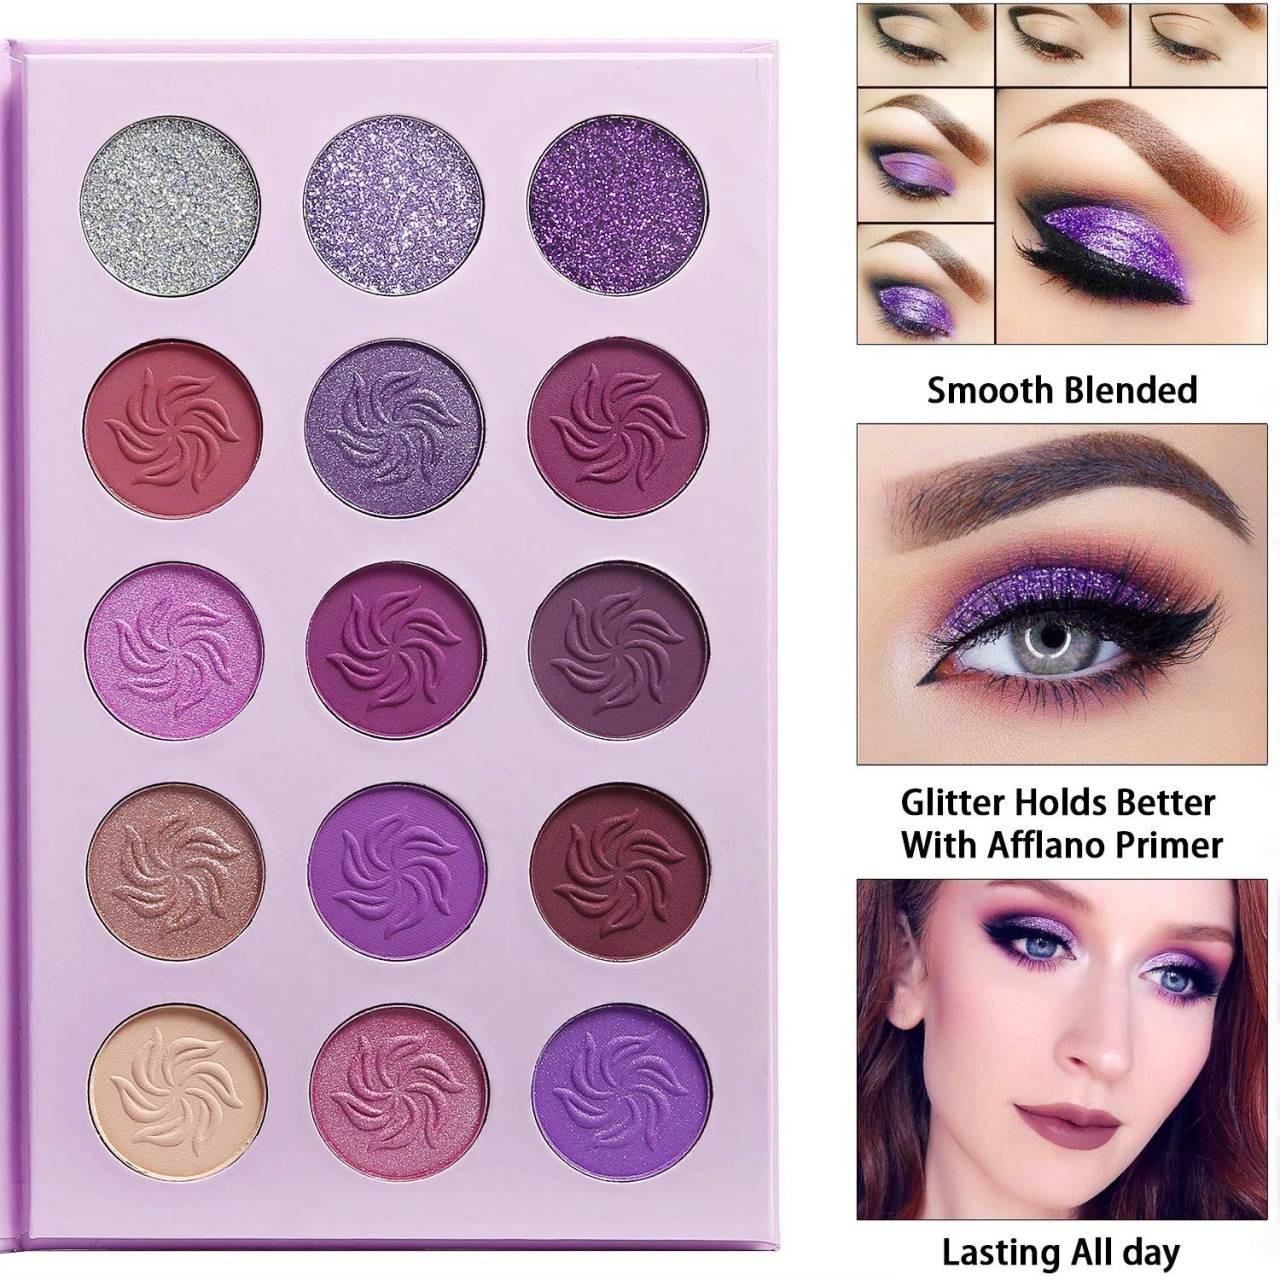 15 Colors Eye Shadow Vegan Makeup Private Label Eyeshadow Palette - Shmily Beauty